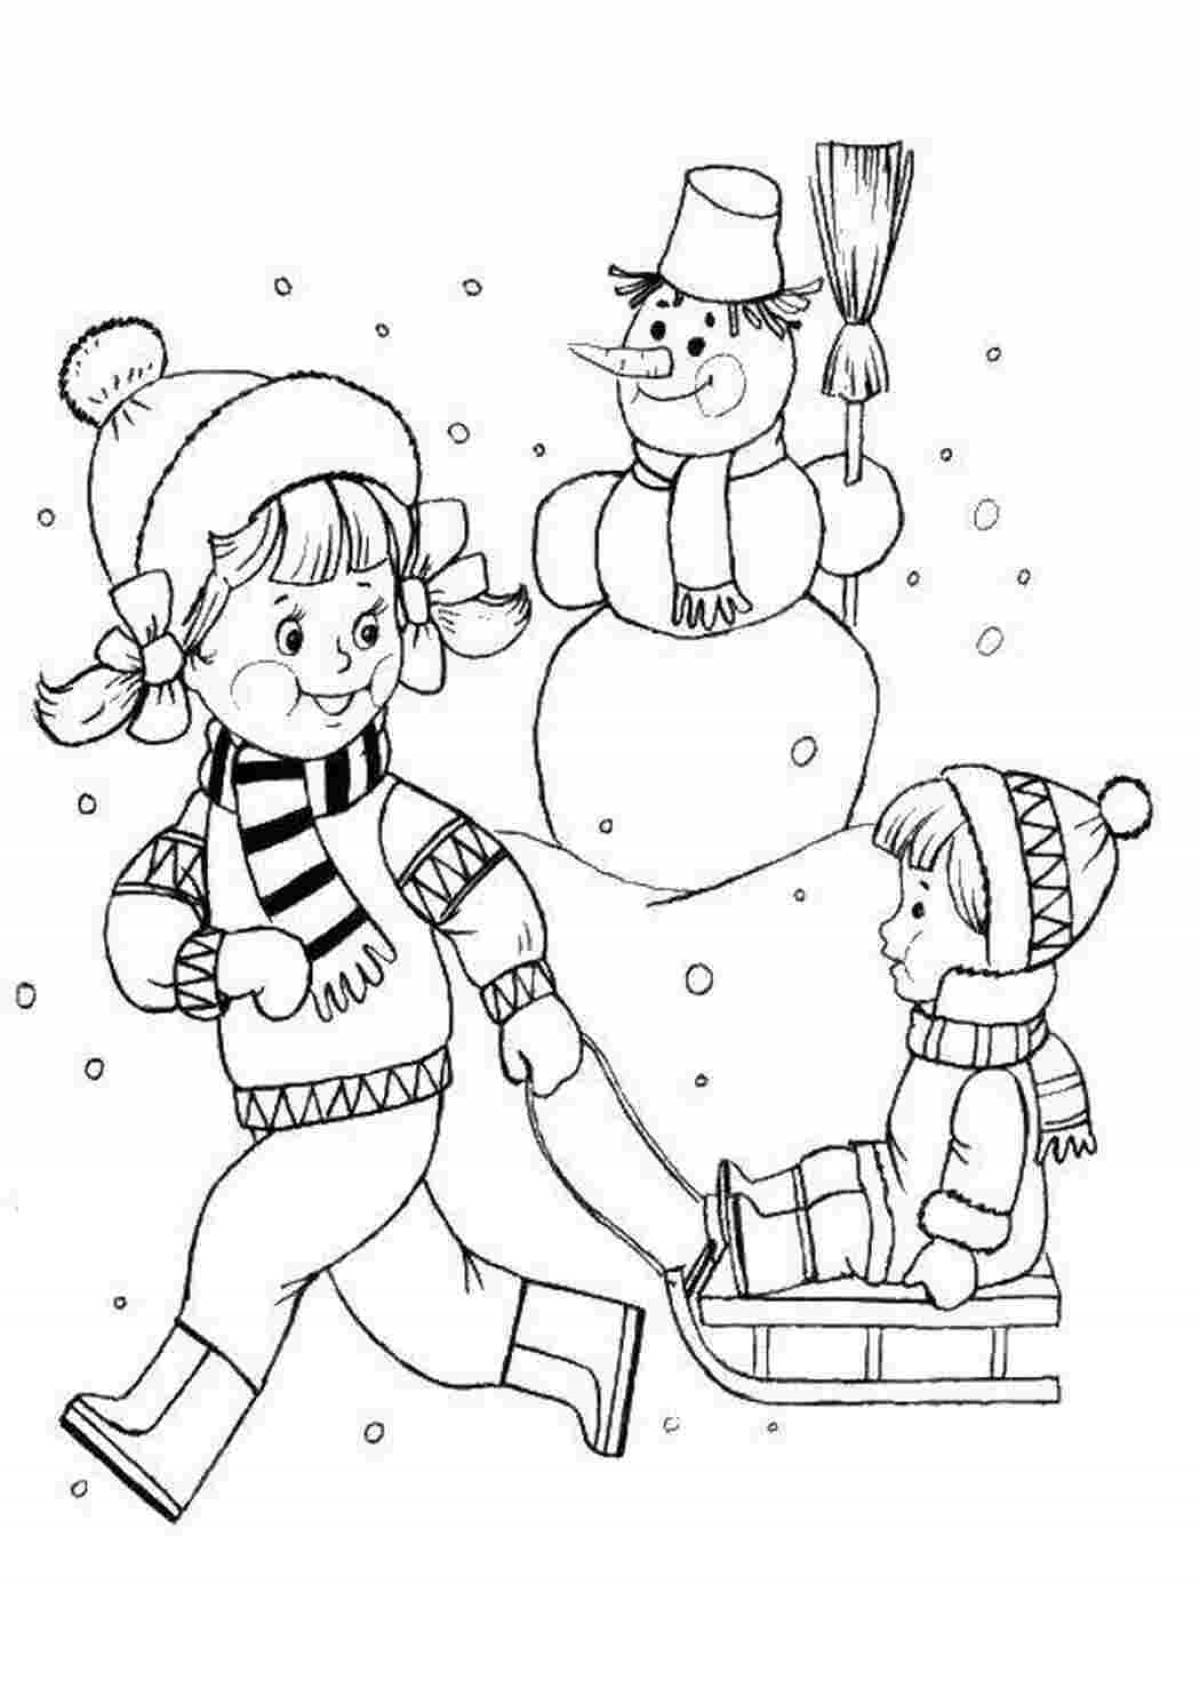 Children's fun in winter #2